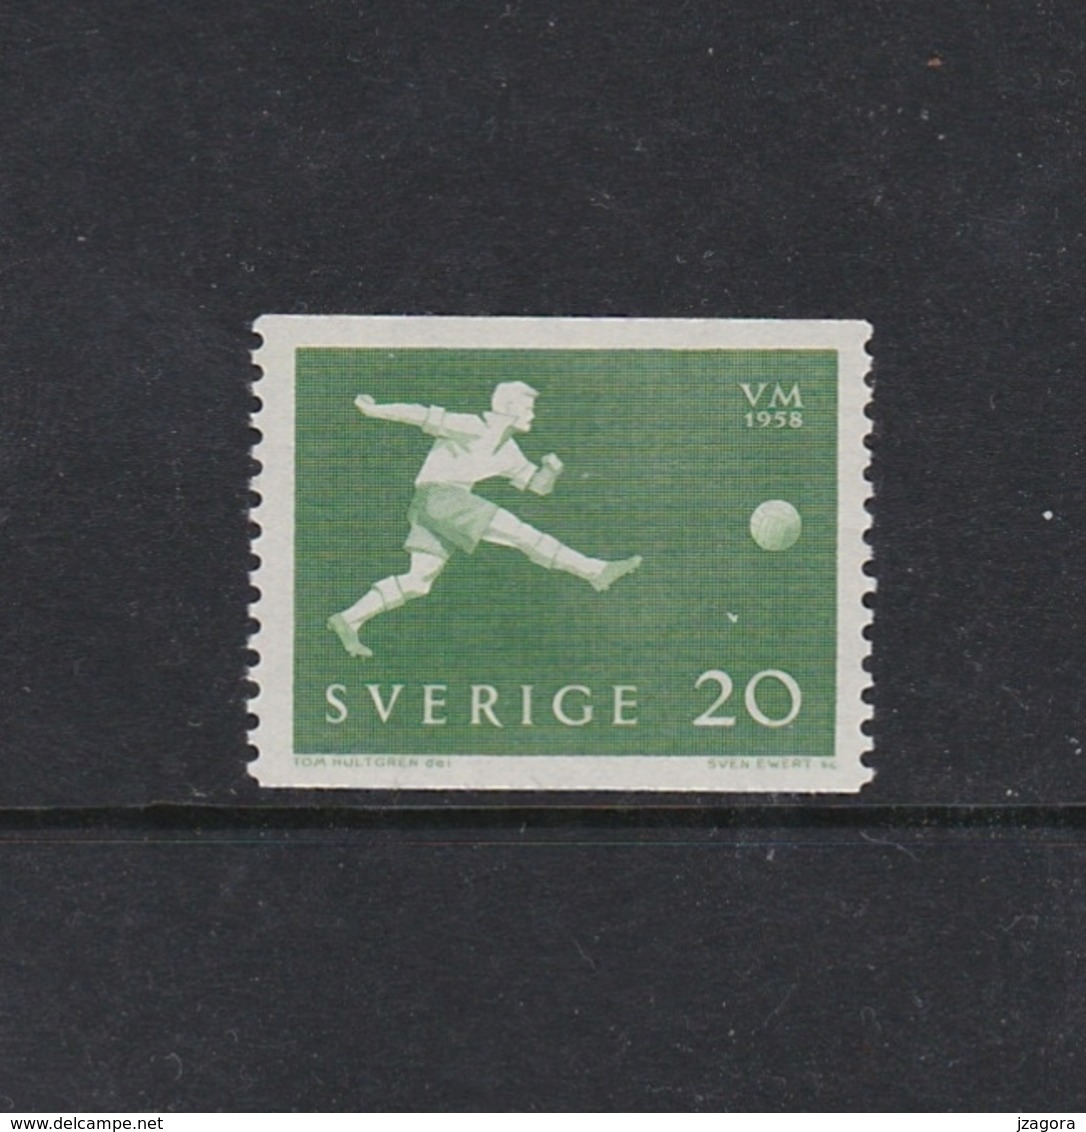 SOCCER FOOTBALL WORLD CHAMPIONSHIP - MUNDIAL 1958 - SWEDEN SCHWEDEN SUEDE MI 439 A MNH - 1958 – Sweden